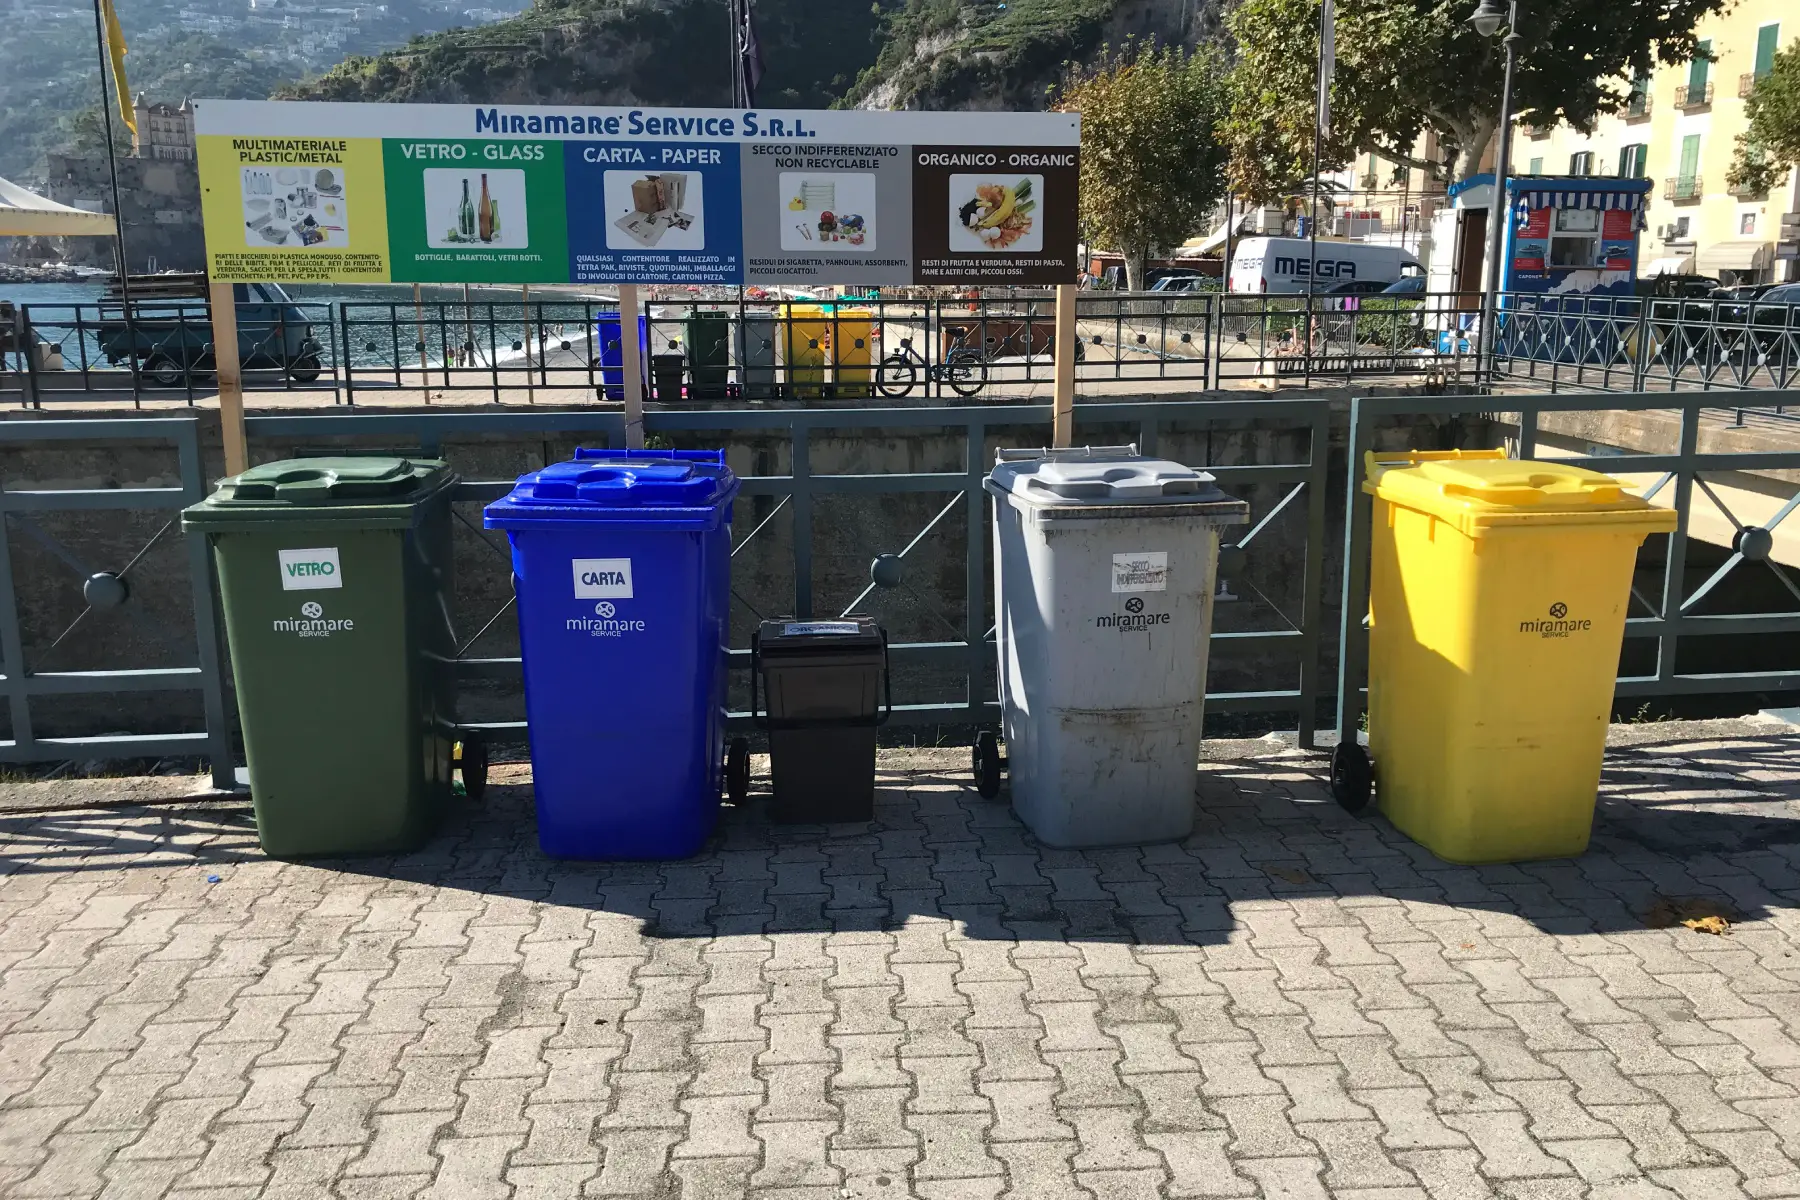 Public recycling bins in Maiori, Italy.